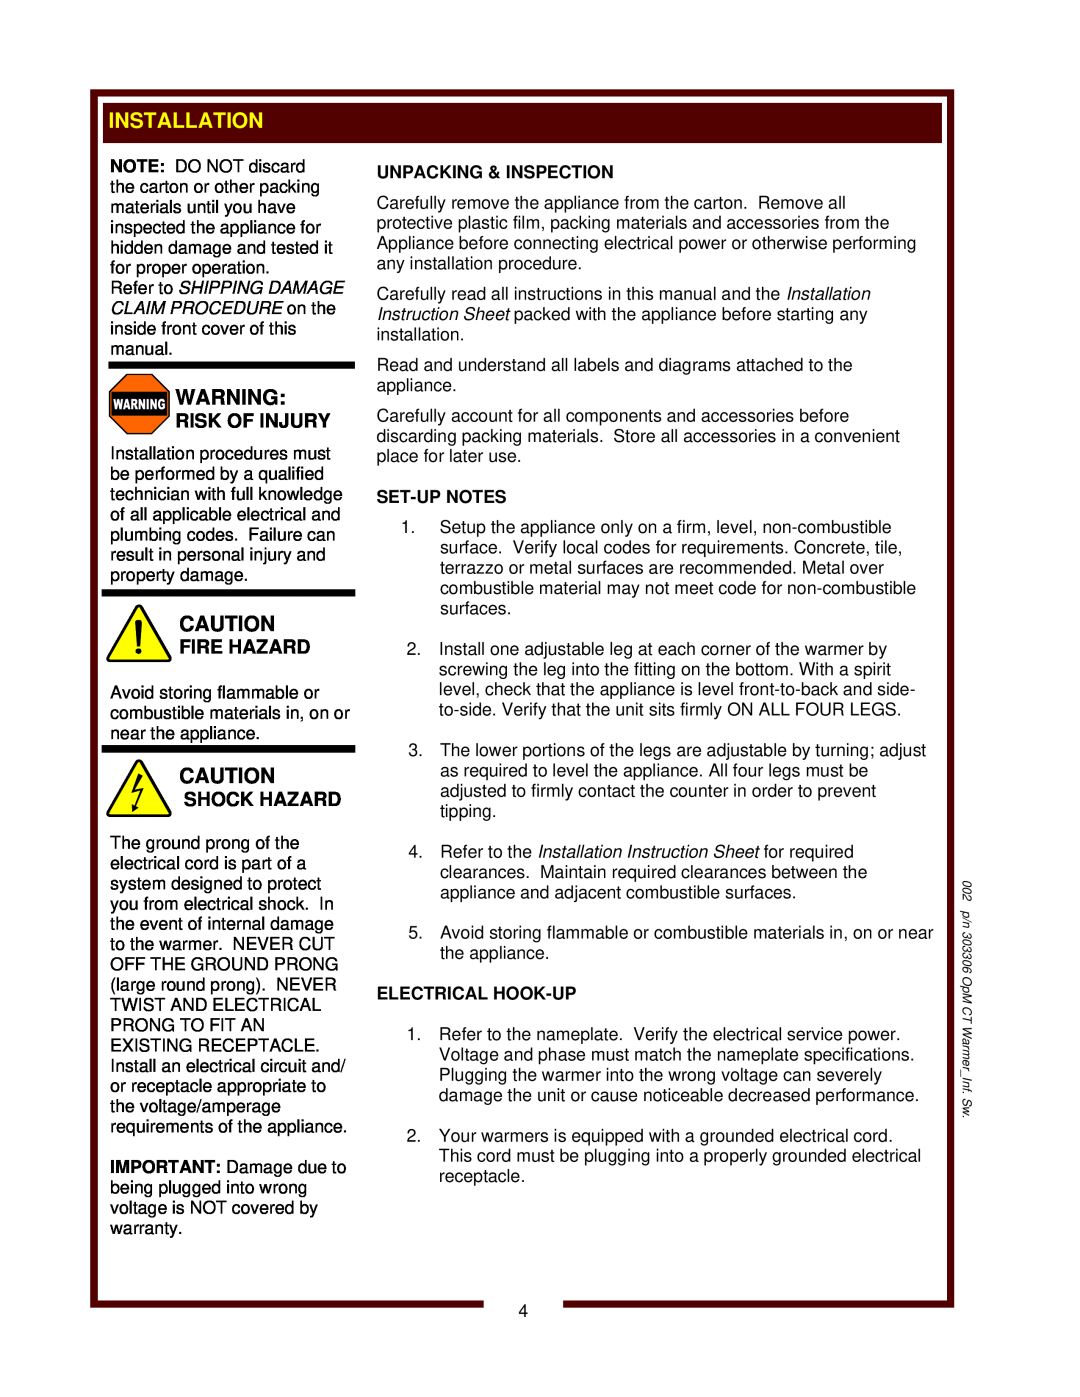 Wells SW-10 Risk Of Injury, Fire Hazard, Shock Hazard, Unpacking & Inspection, Set-Up Notes, Electrical Hook-Up 